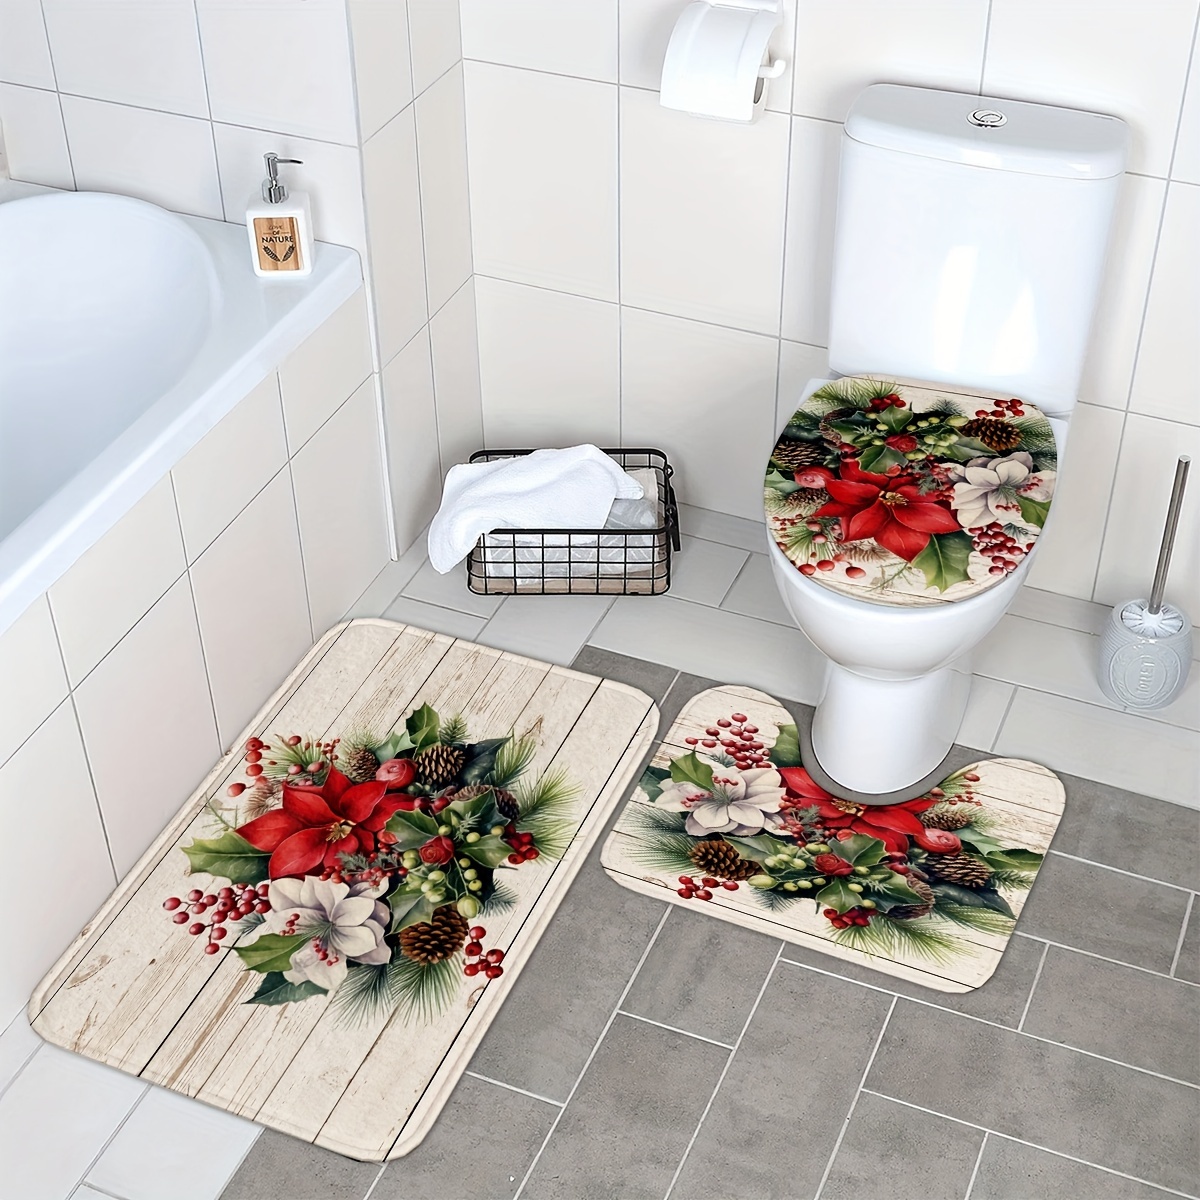 Restroom Service Mats  Toilet Mats by